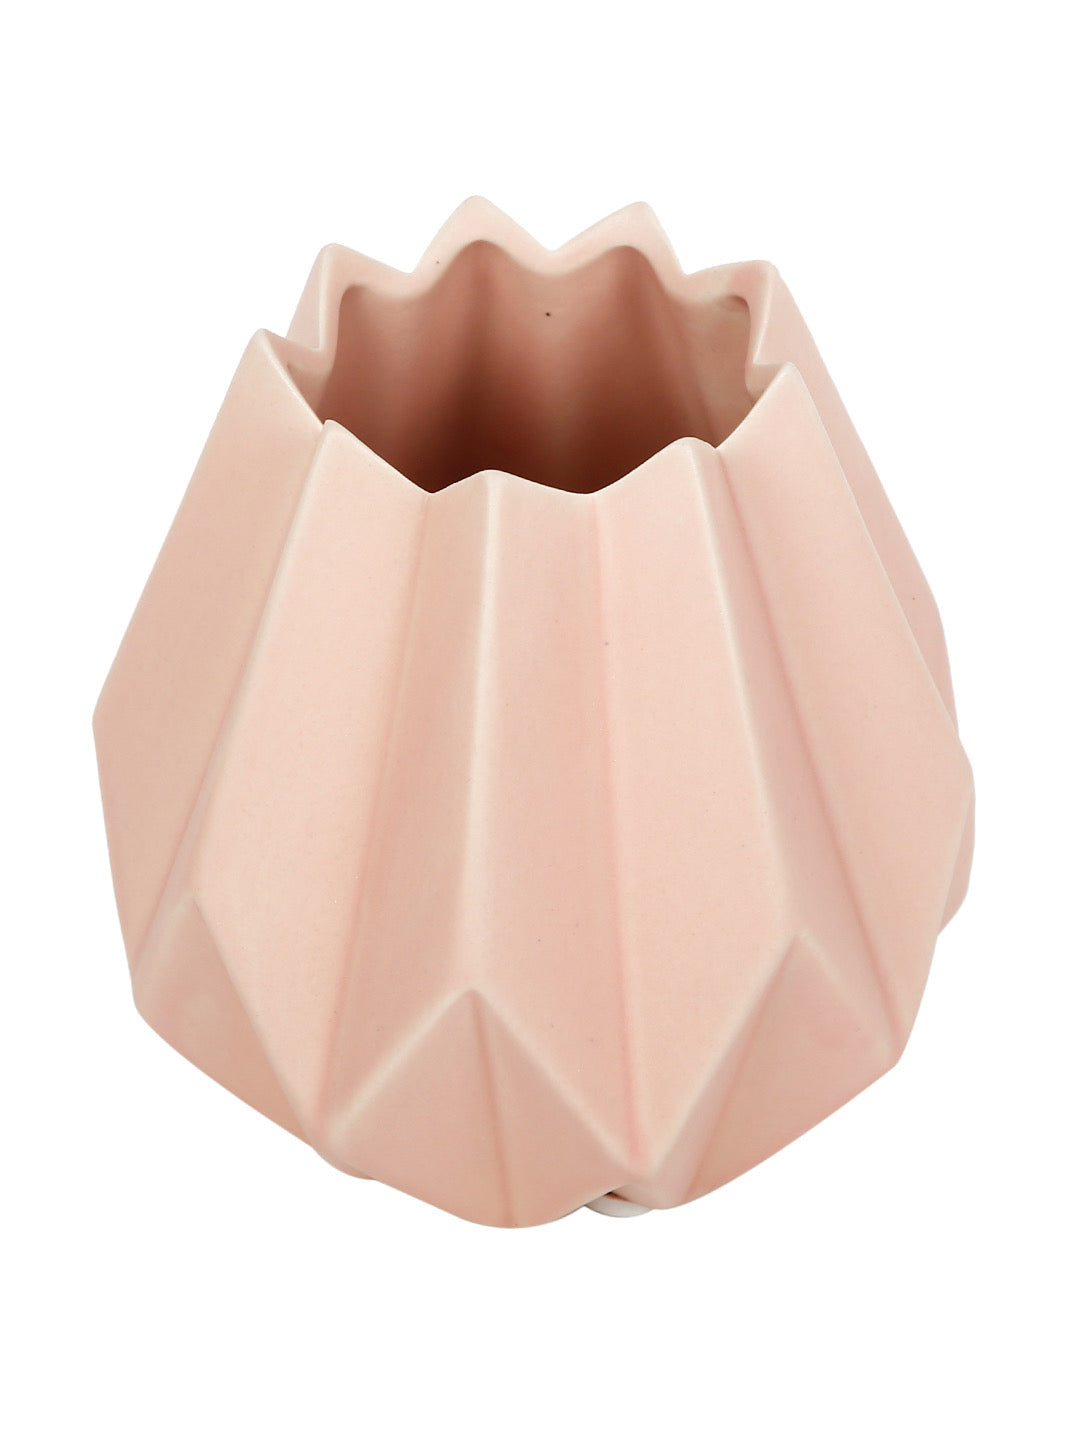 Asymmetrical Peach Ceramic Vase - Default Title (VAS21408)